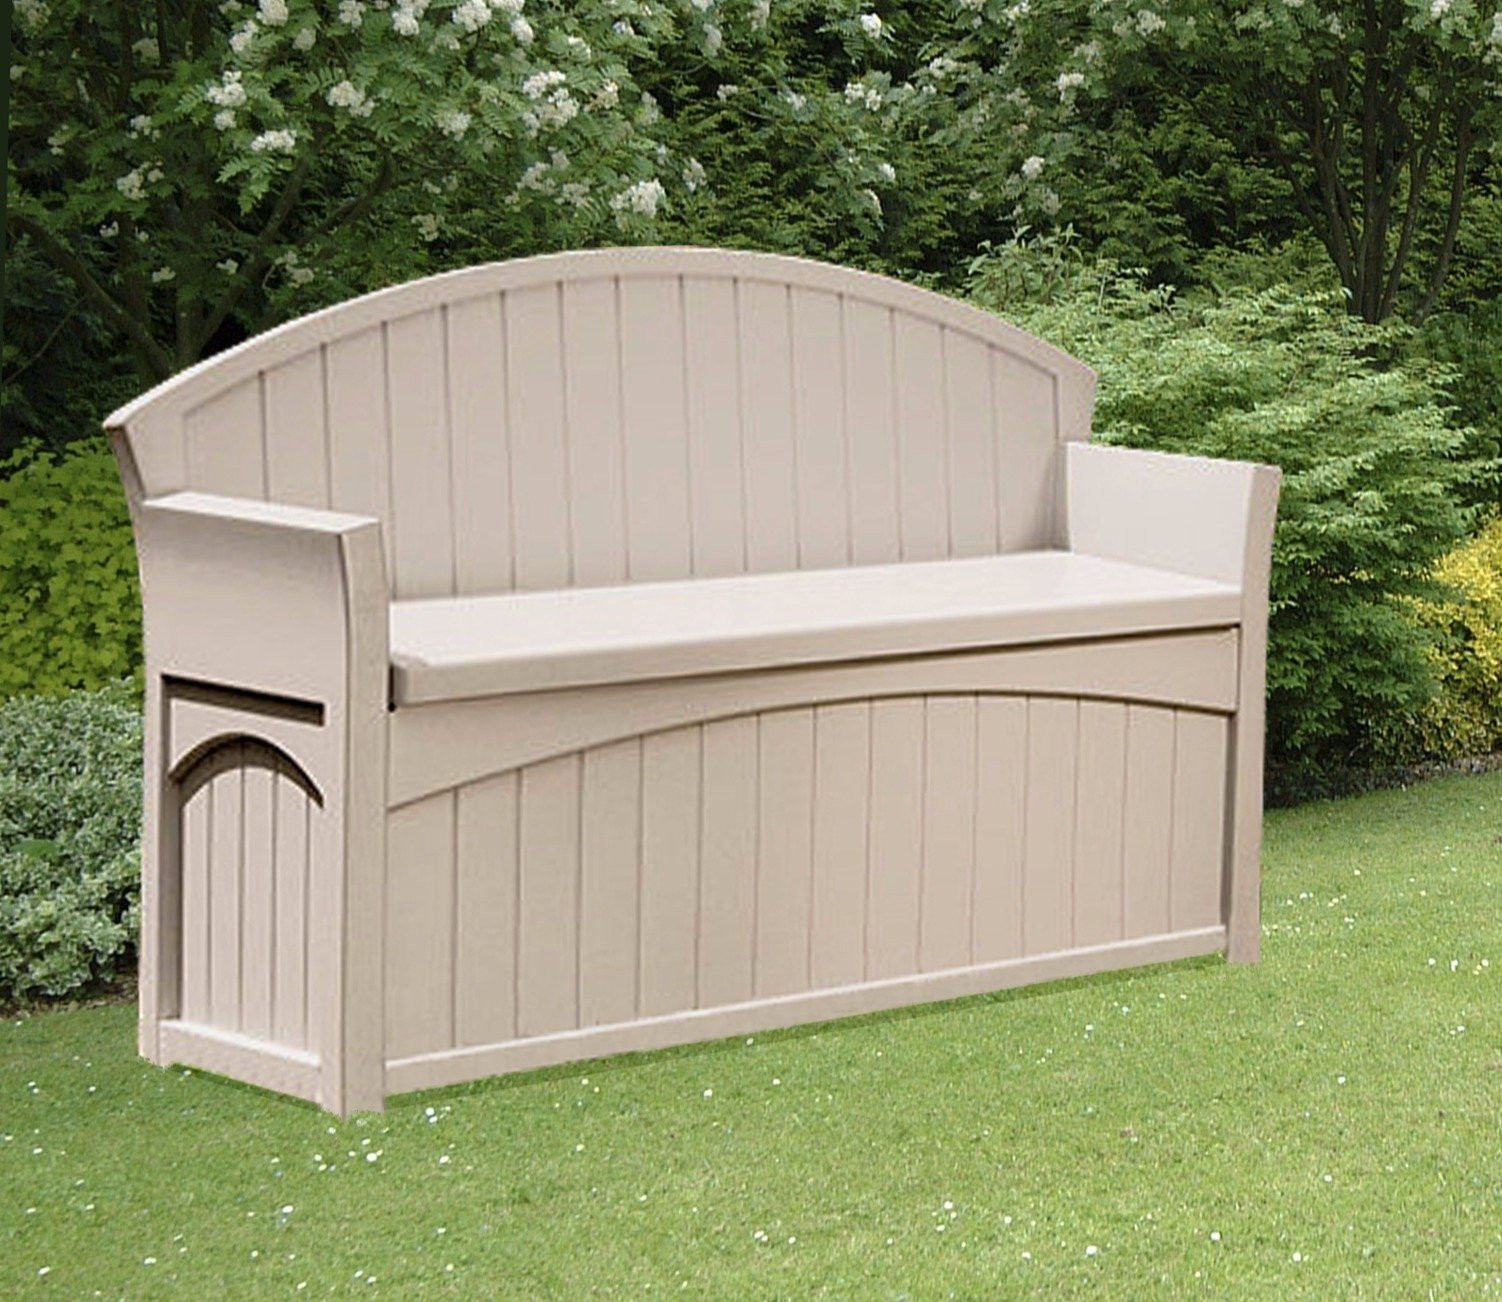 Storage Patio Benches
 Suncast Patio Garden Outdoor Bench with 50 Gallon Storage